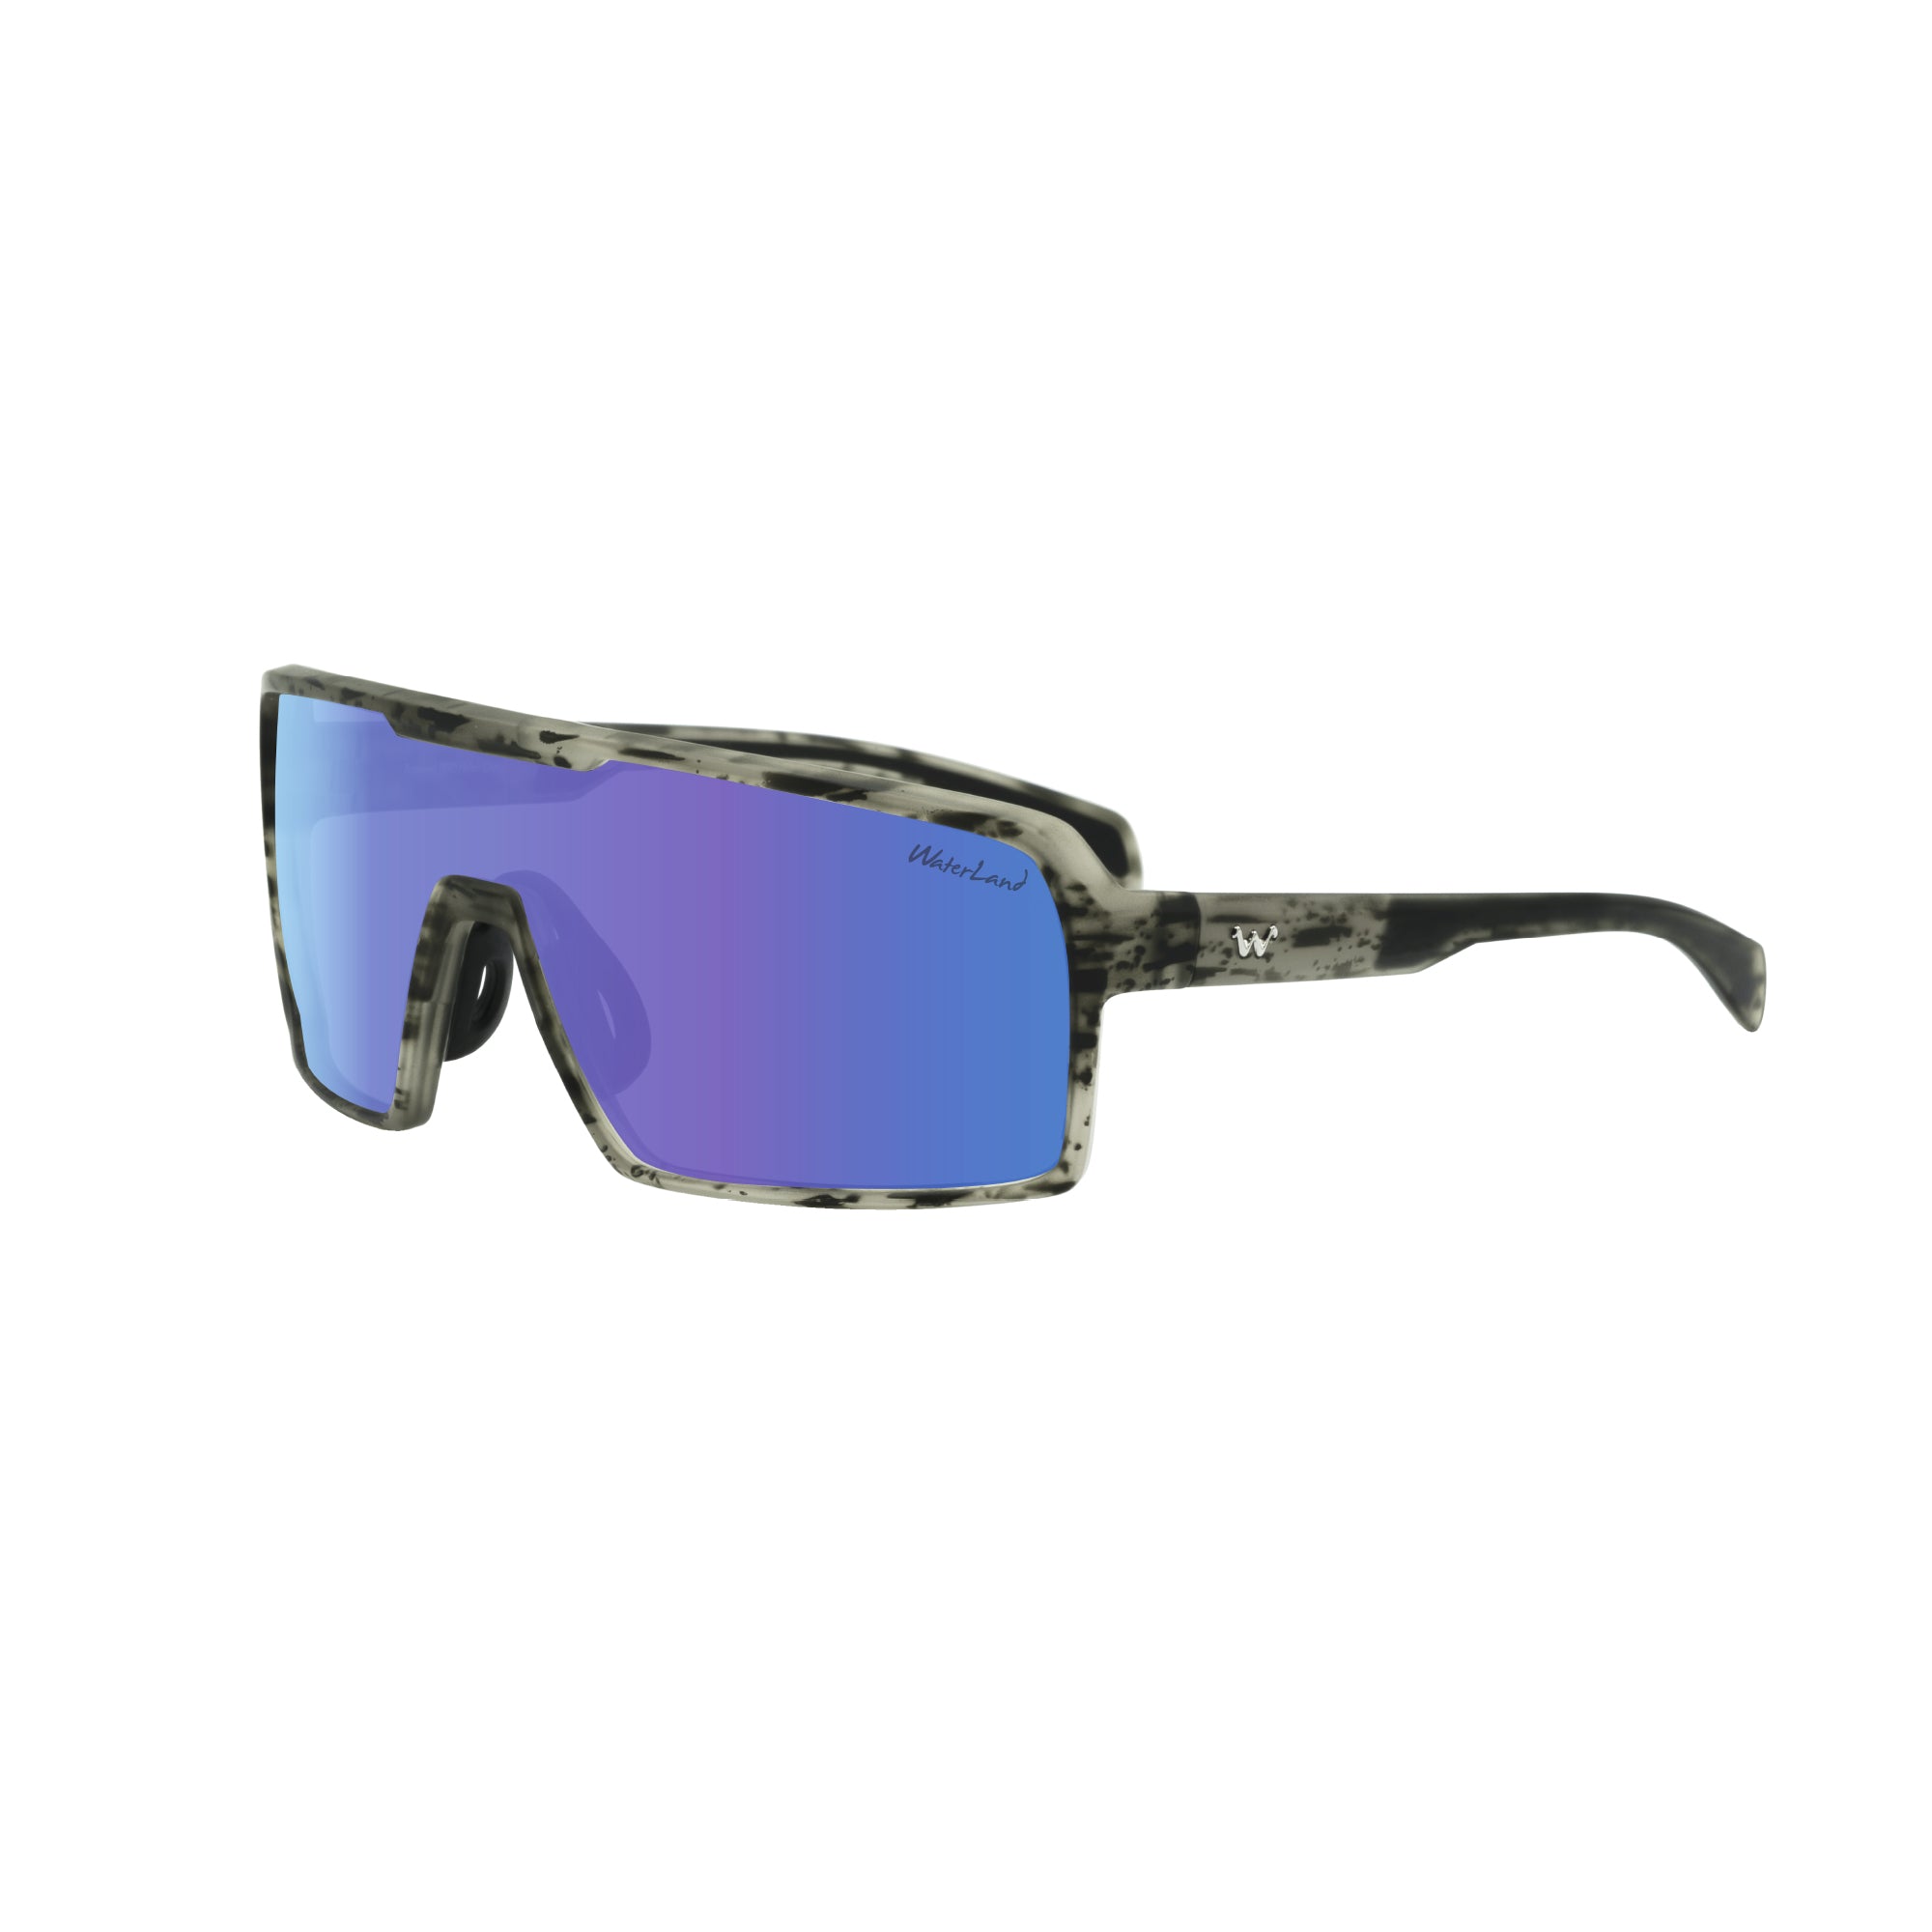 Waterland Polarized Sunglasses - Catchem - Blackwater